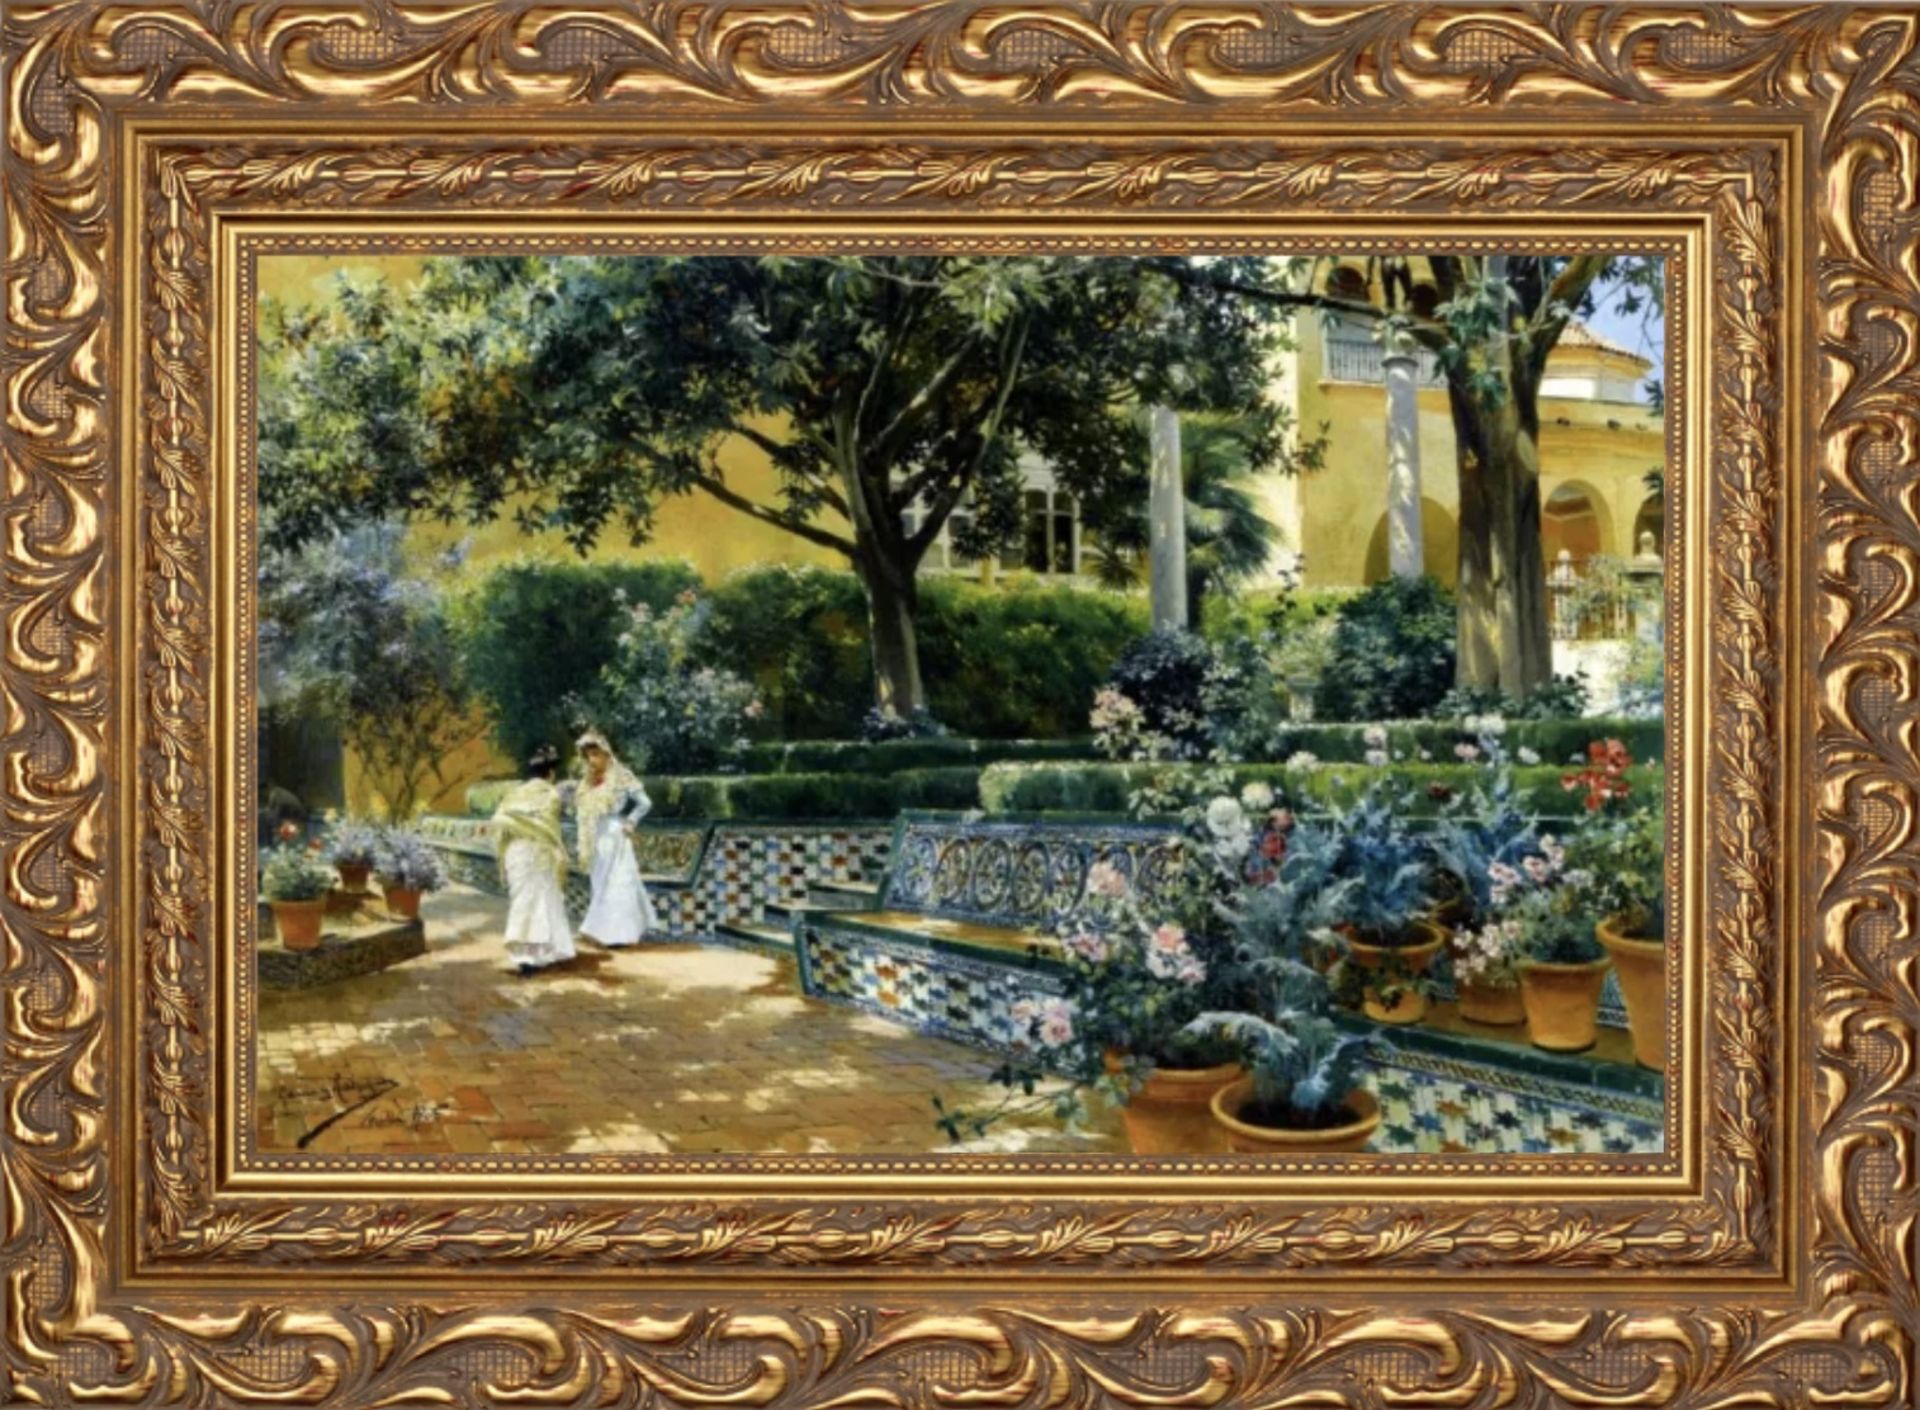 Manuel Garcia y Rodriguez "Gardens of the Alcazar Seville" Oil Painting